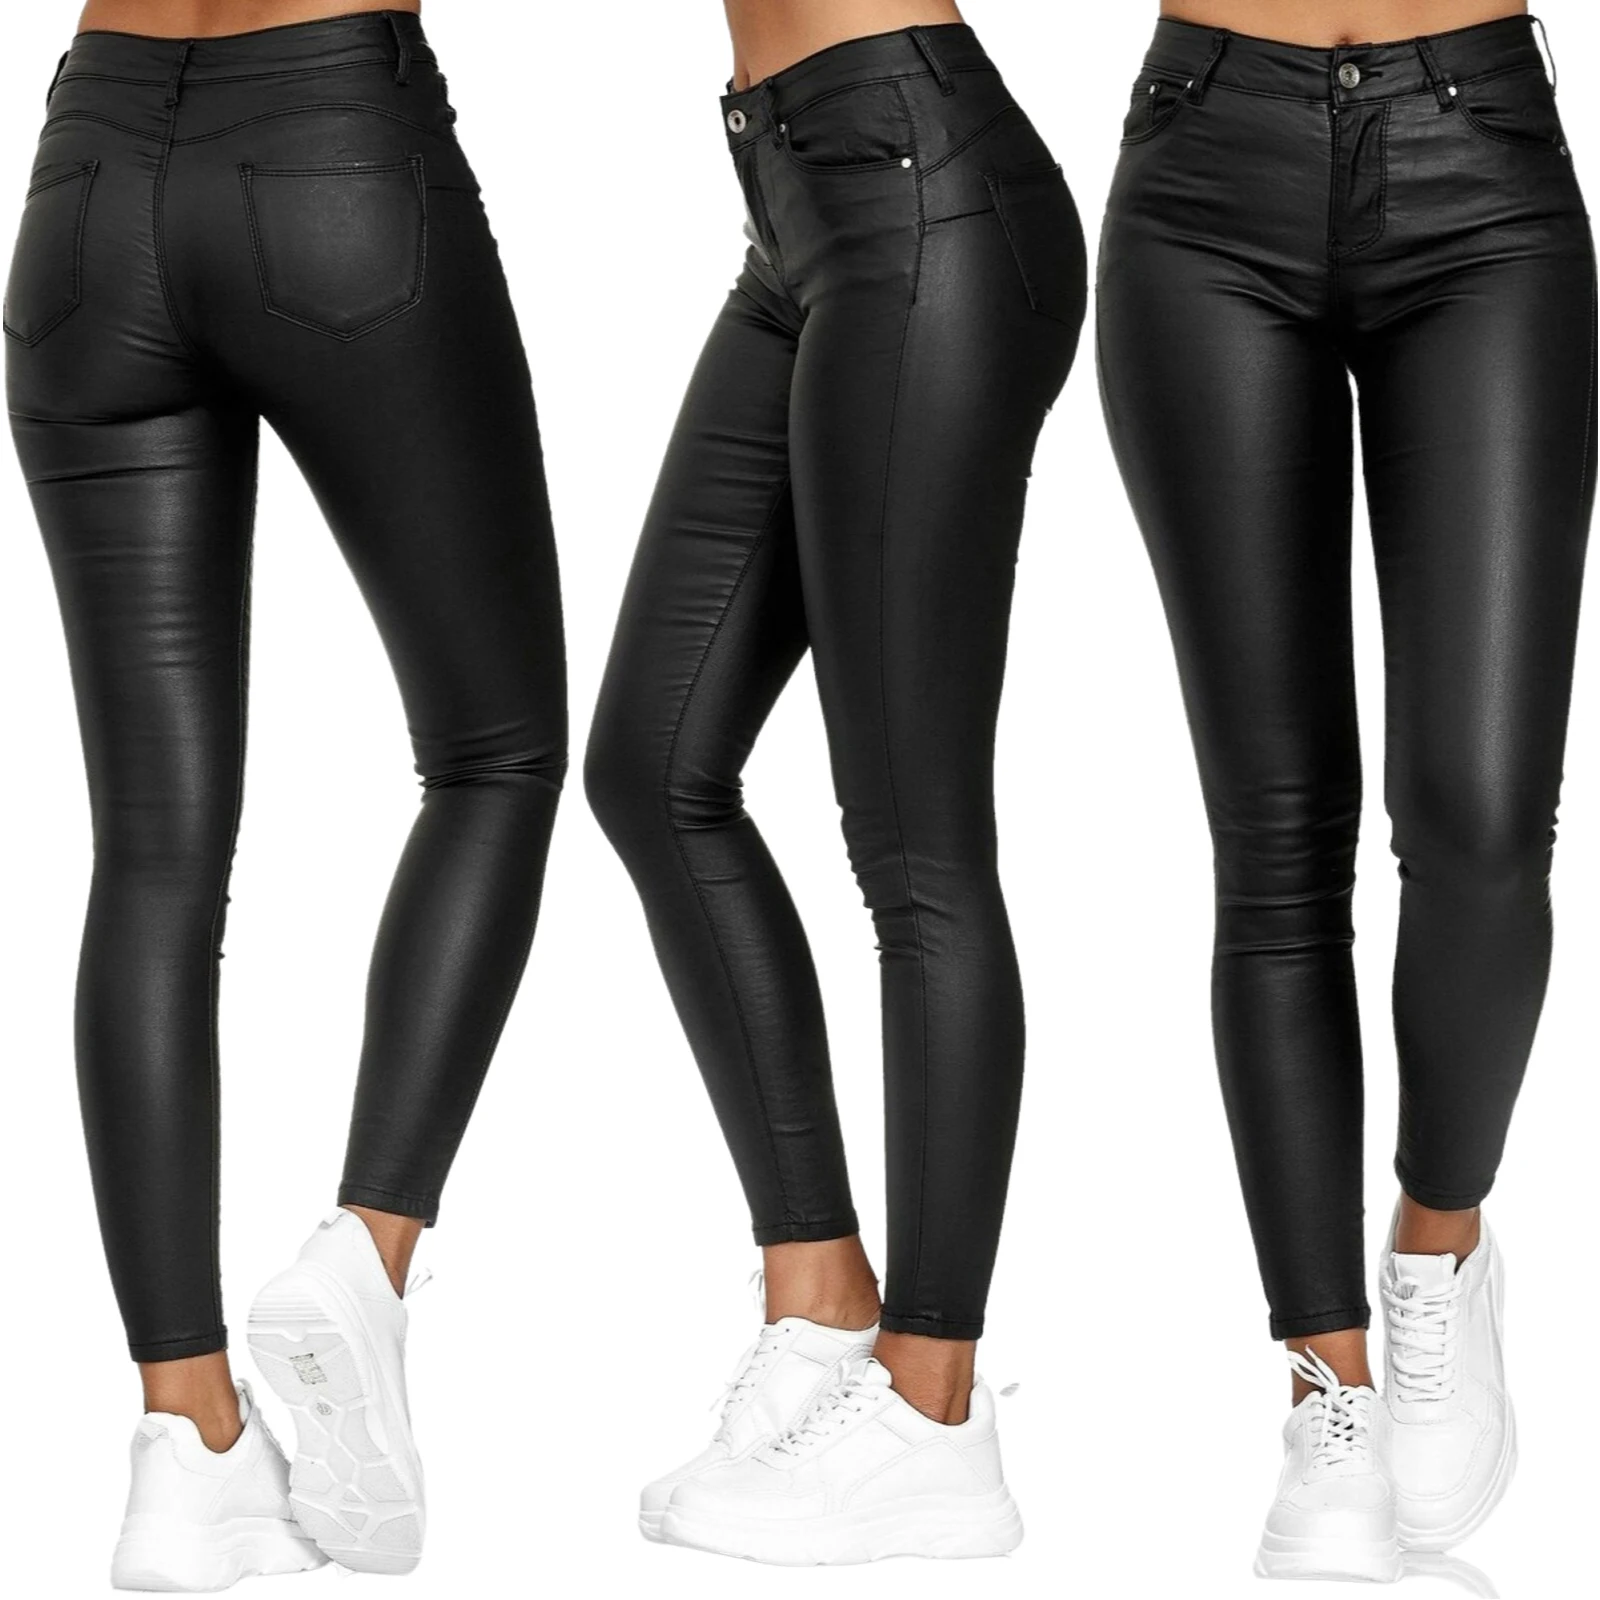 New Women PU Leather Pants High Waist Skinny Push Up Leggings Elastic Trousers Spandex Jeggings Streetwear S-3XL